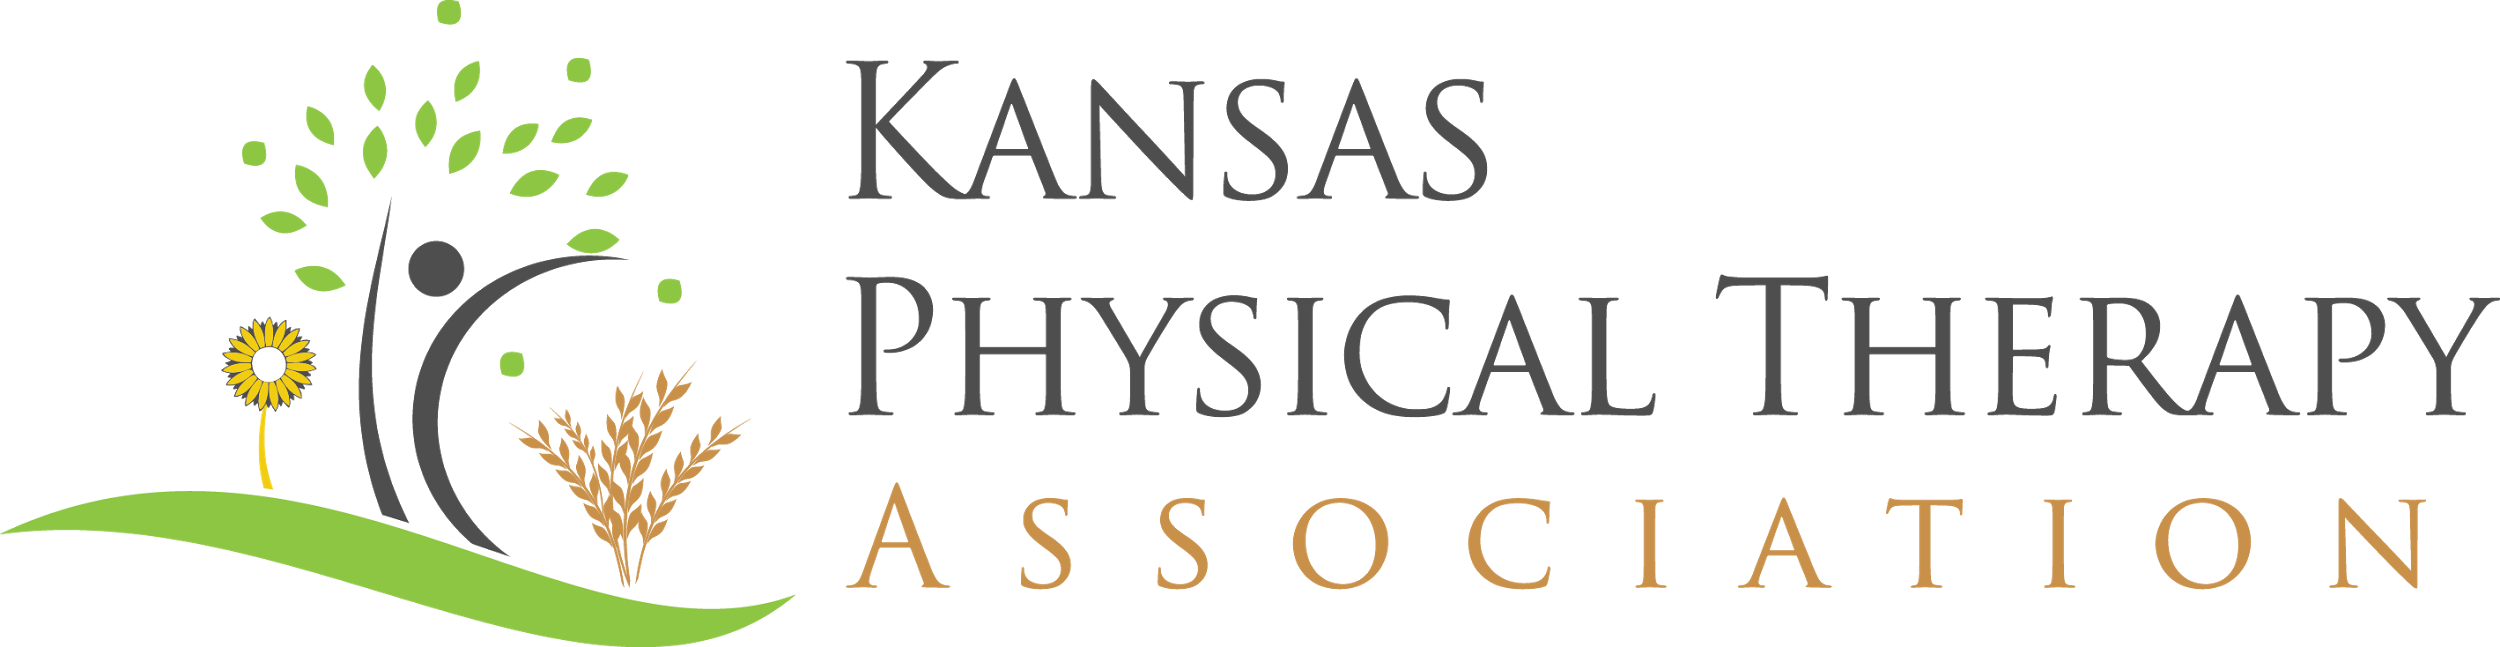 Kansas Physical Therapy Association Logo